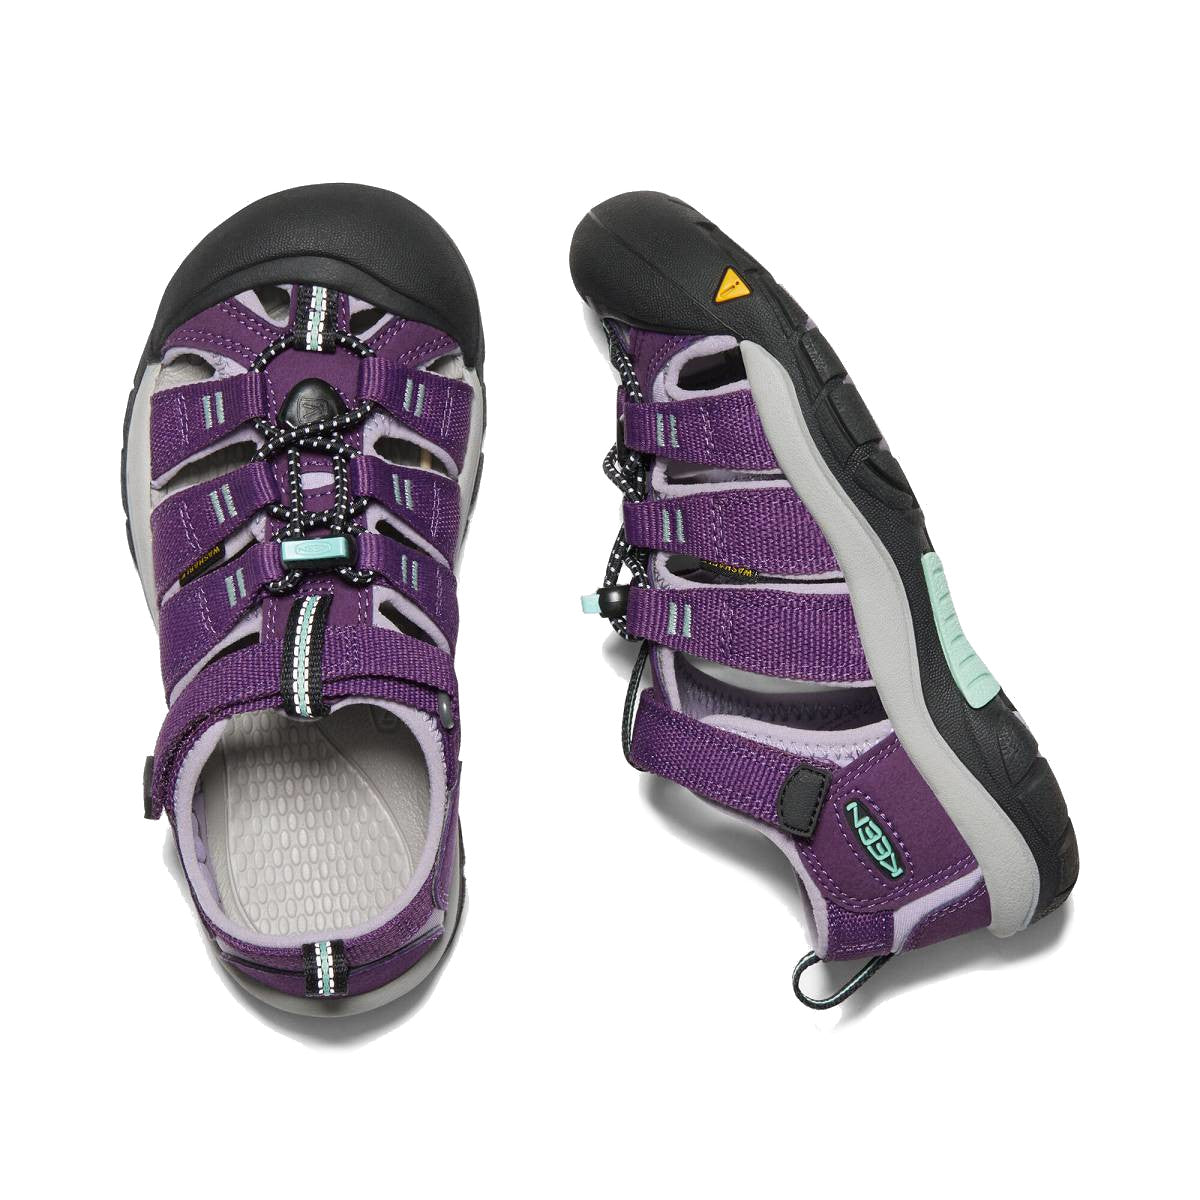 Keen Little Kids' Newport H2 Sandal - Purple Pennant/ Lavender Gray